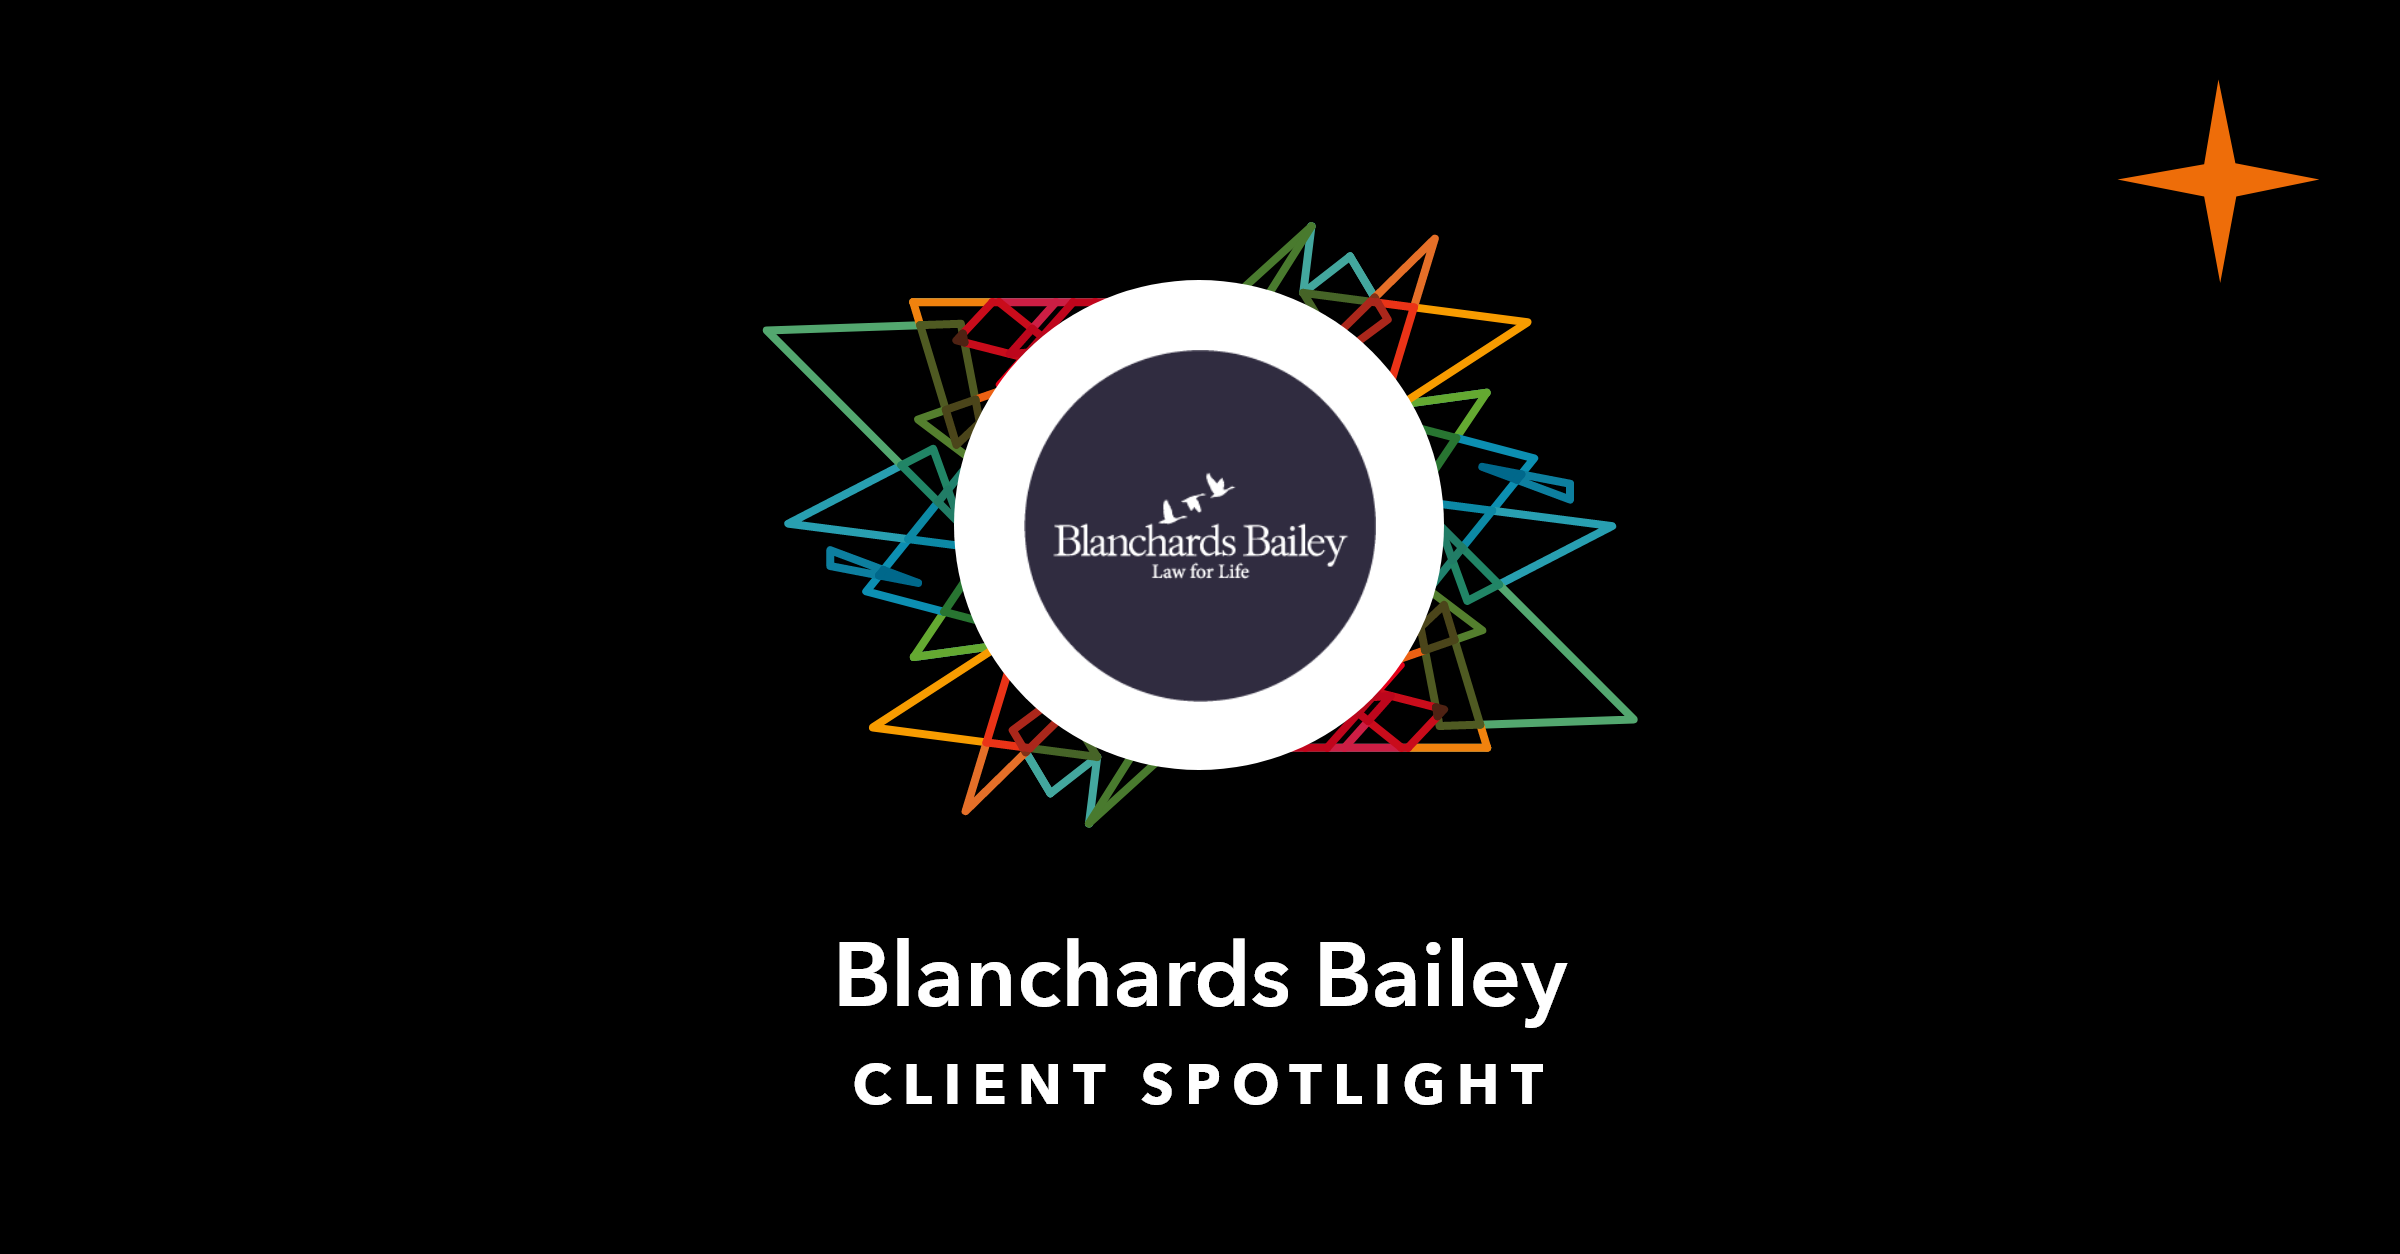 The CIO Service - Blanchards Bailey Client Spotlight